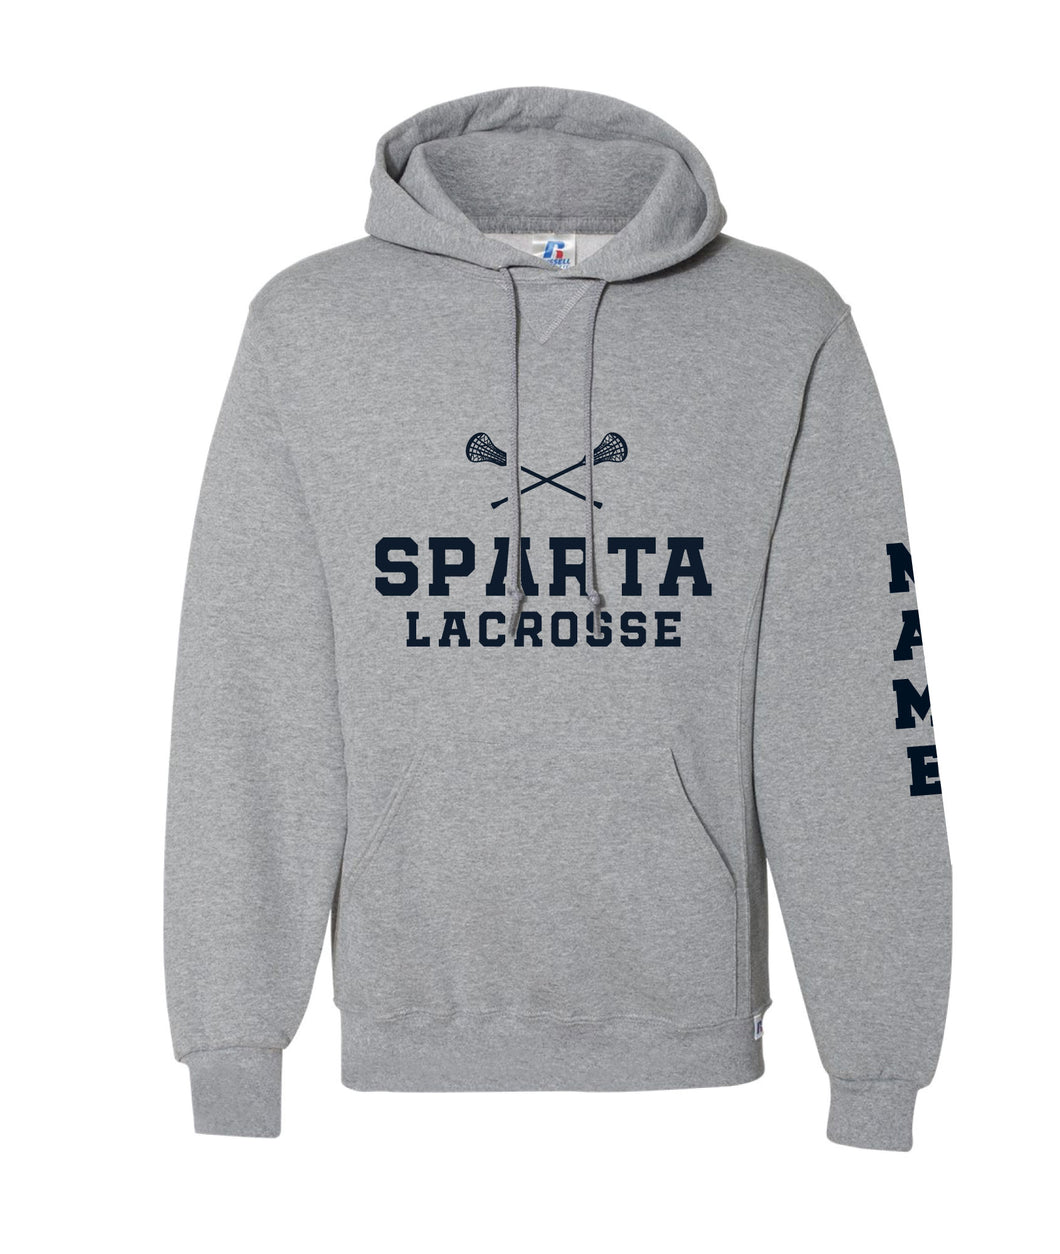 Sparta Lacrosse Russell Athletic Cotton Hoodie - Gray - 5KounT